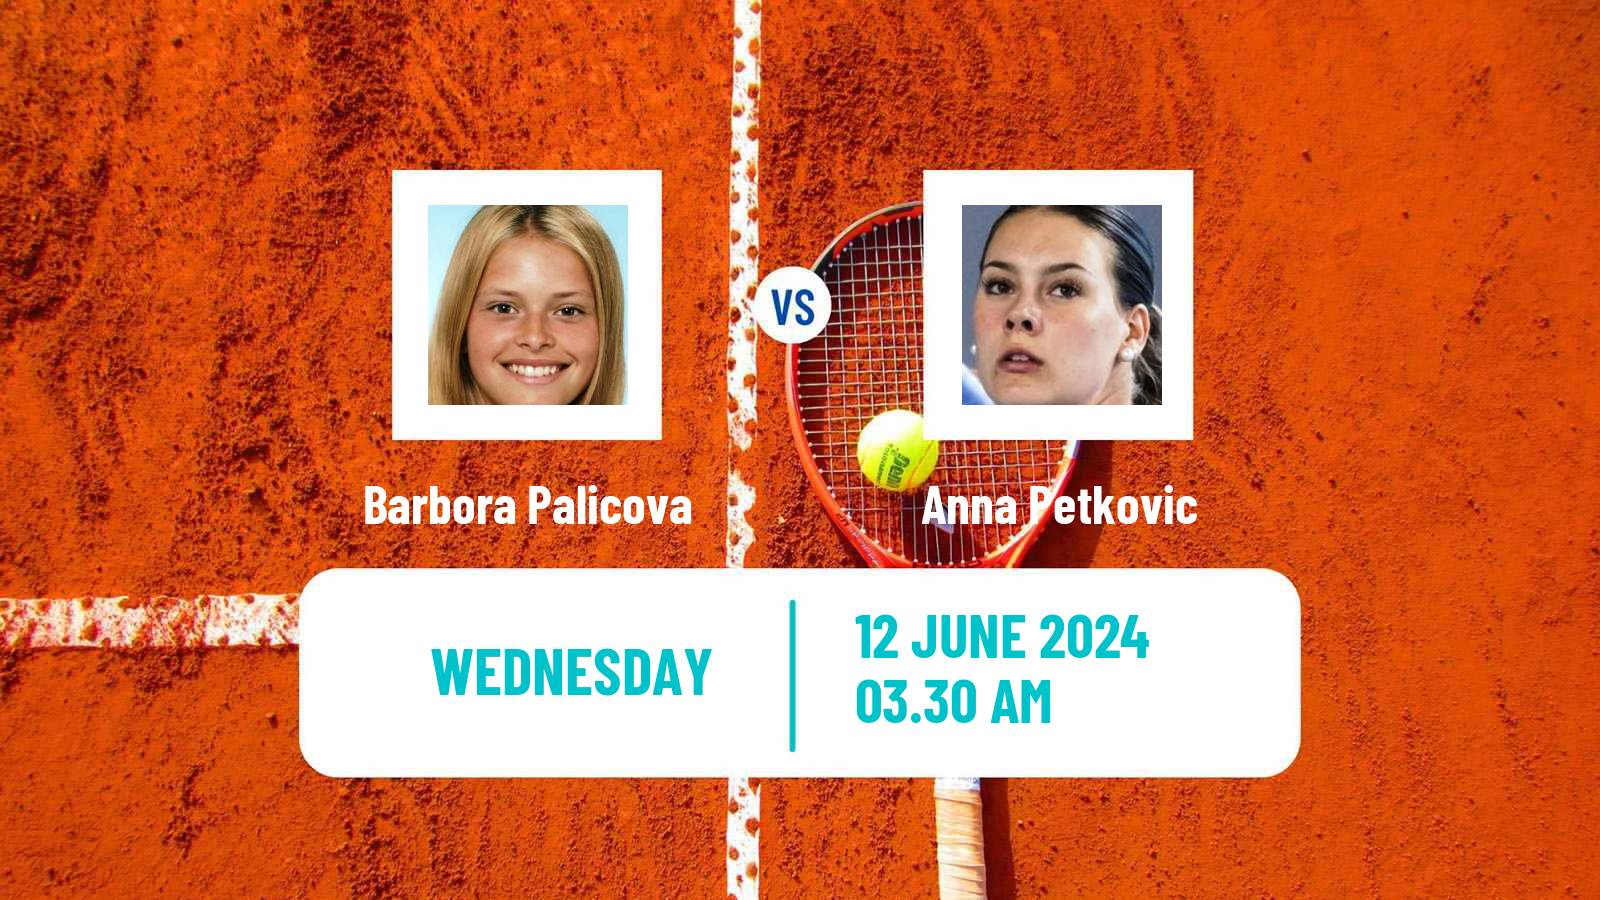 Tennis ITF W35 Gdansk Women Barbora Palicova - Anna Petkovic